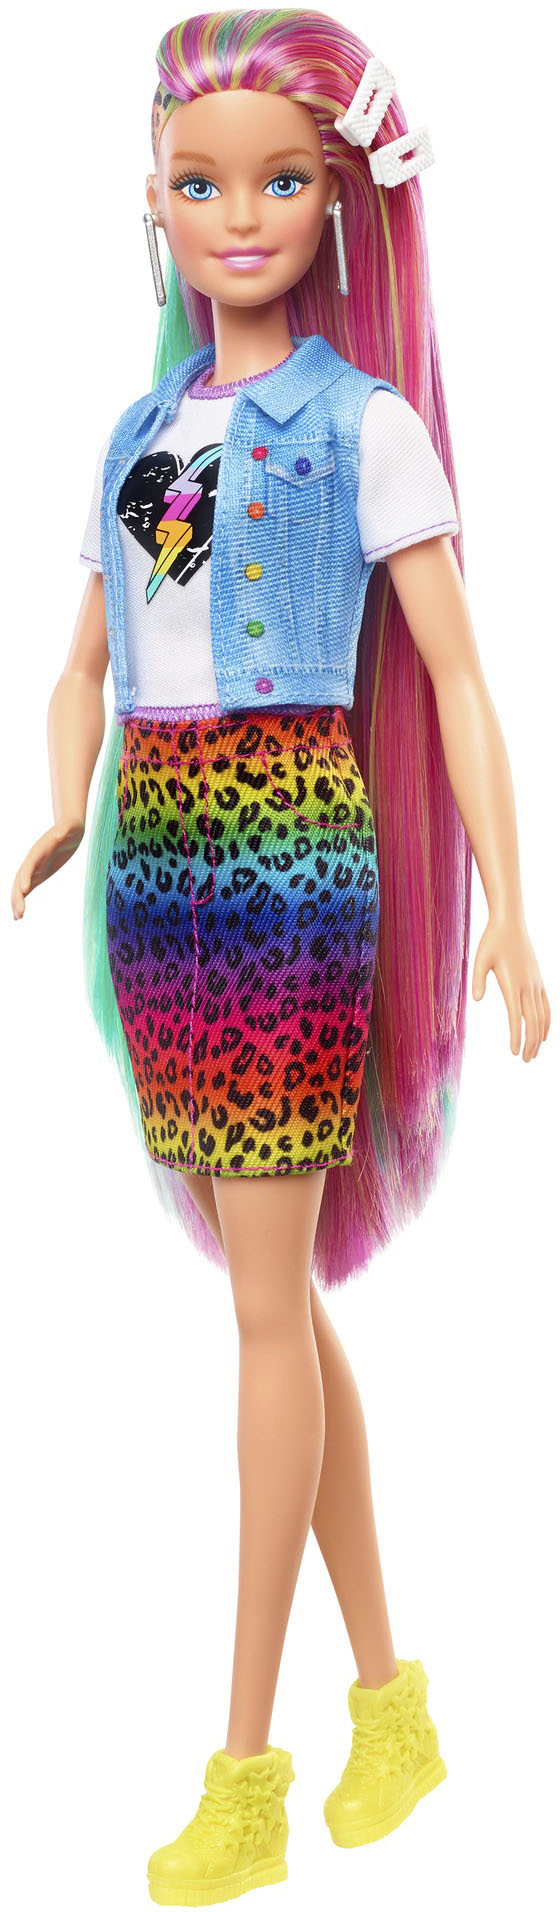 Left View: Barbie - Leopard Rainbow Hair Doll, Blonde